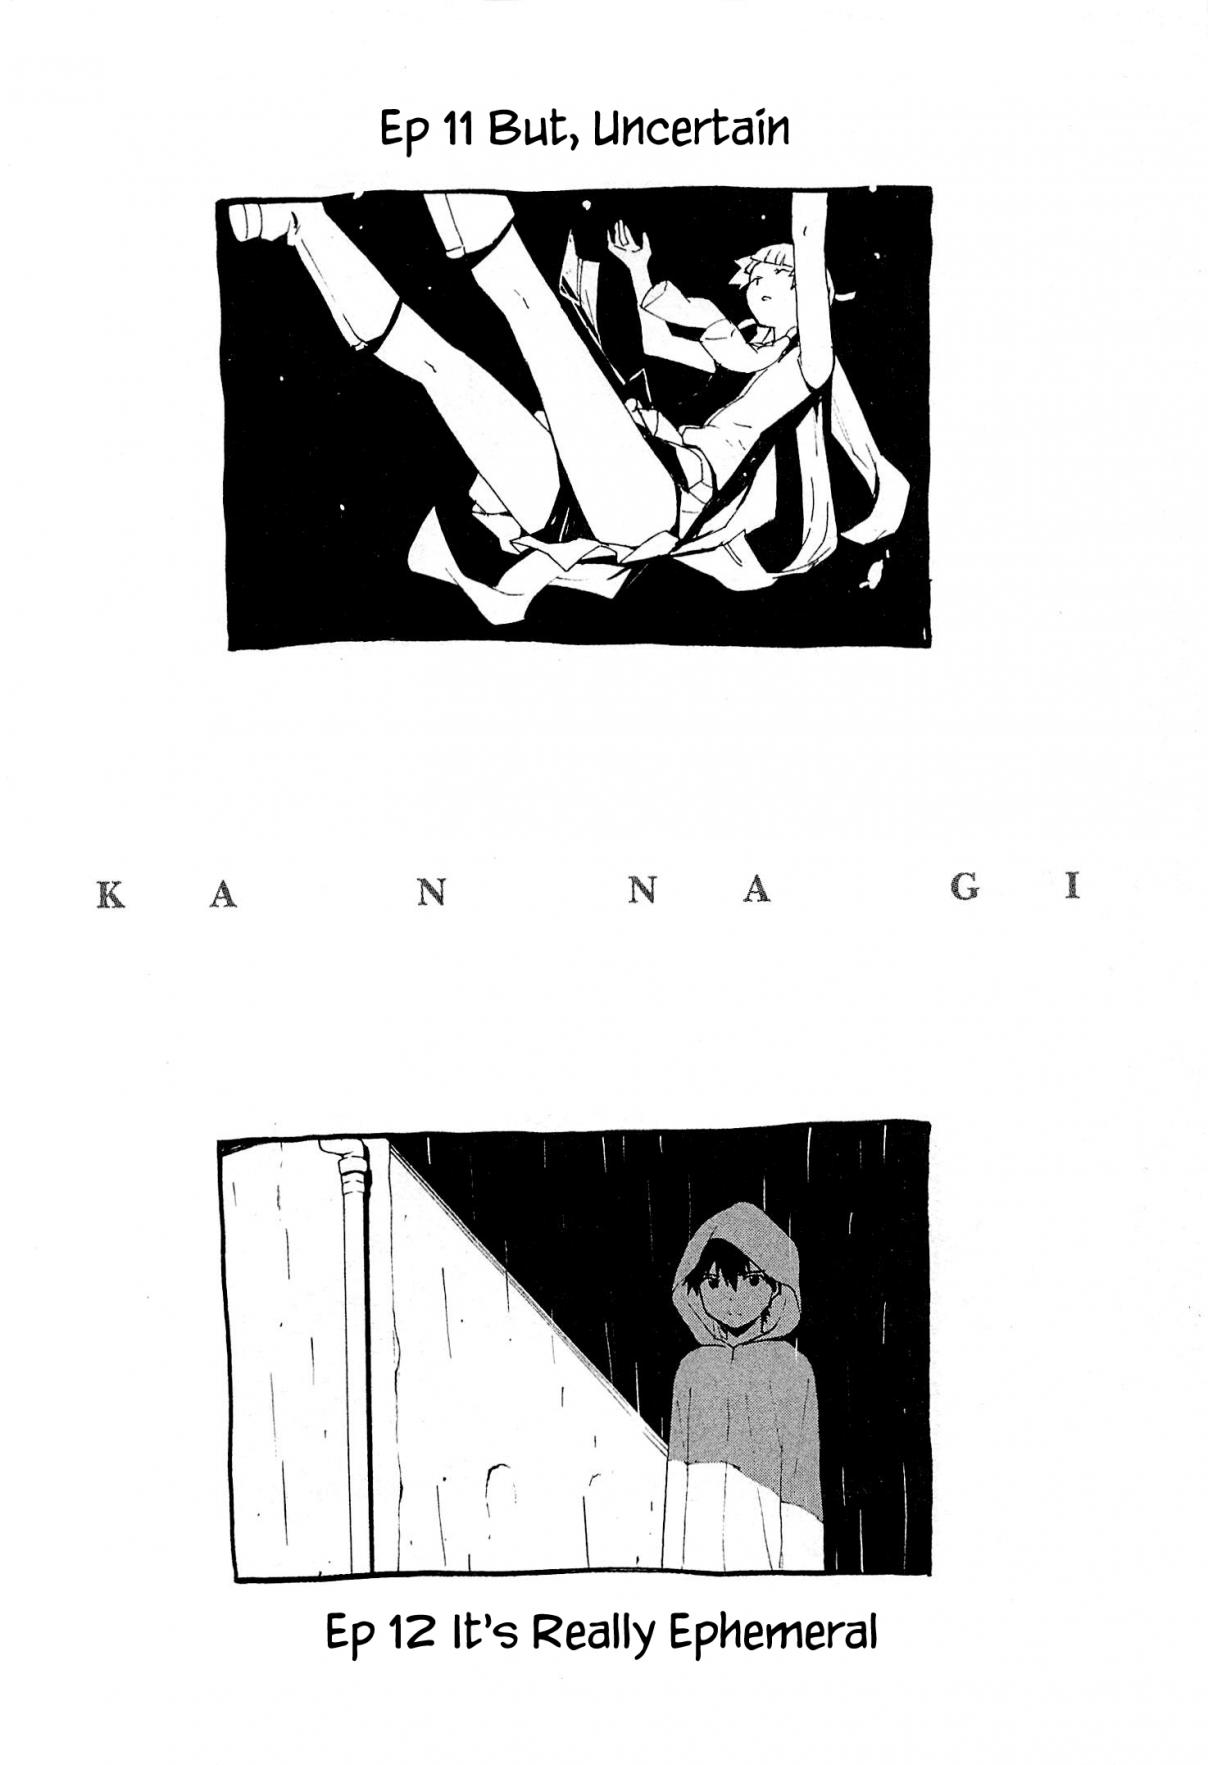 Kannagi Vol. 8 Ch. 48.6 anime script book cover illustrations